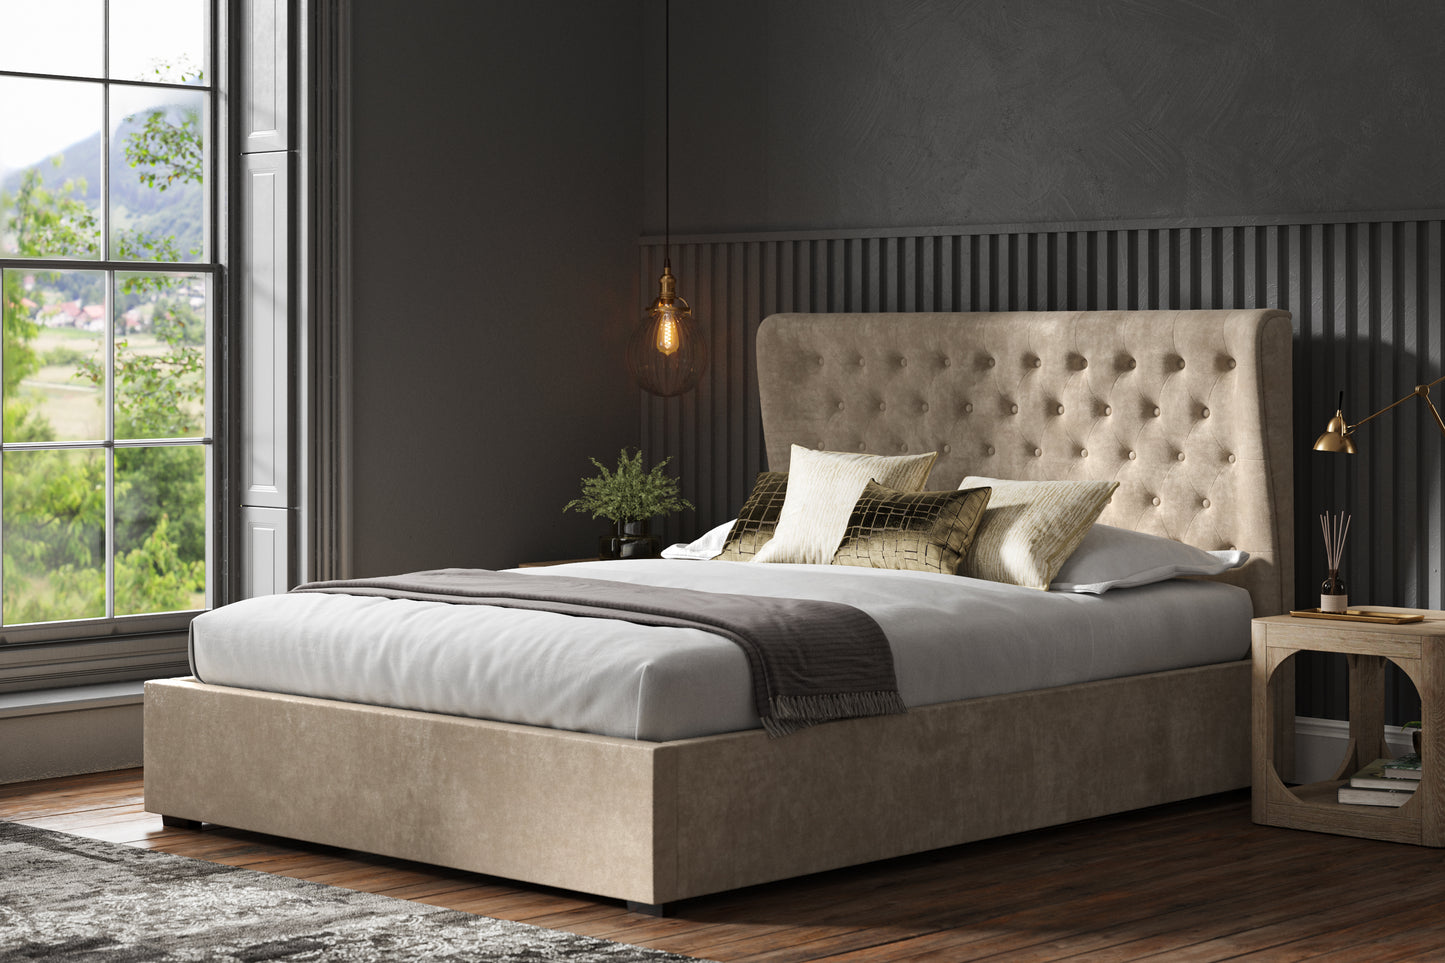 Hampstead Fabric Ottoman Lift-up Storage Bed - NIXO Furniture.com